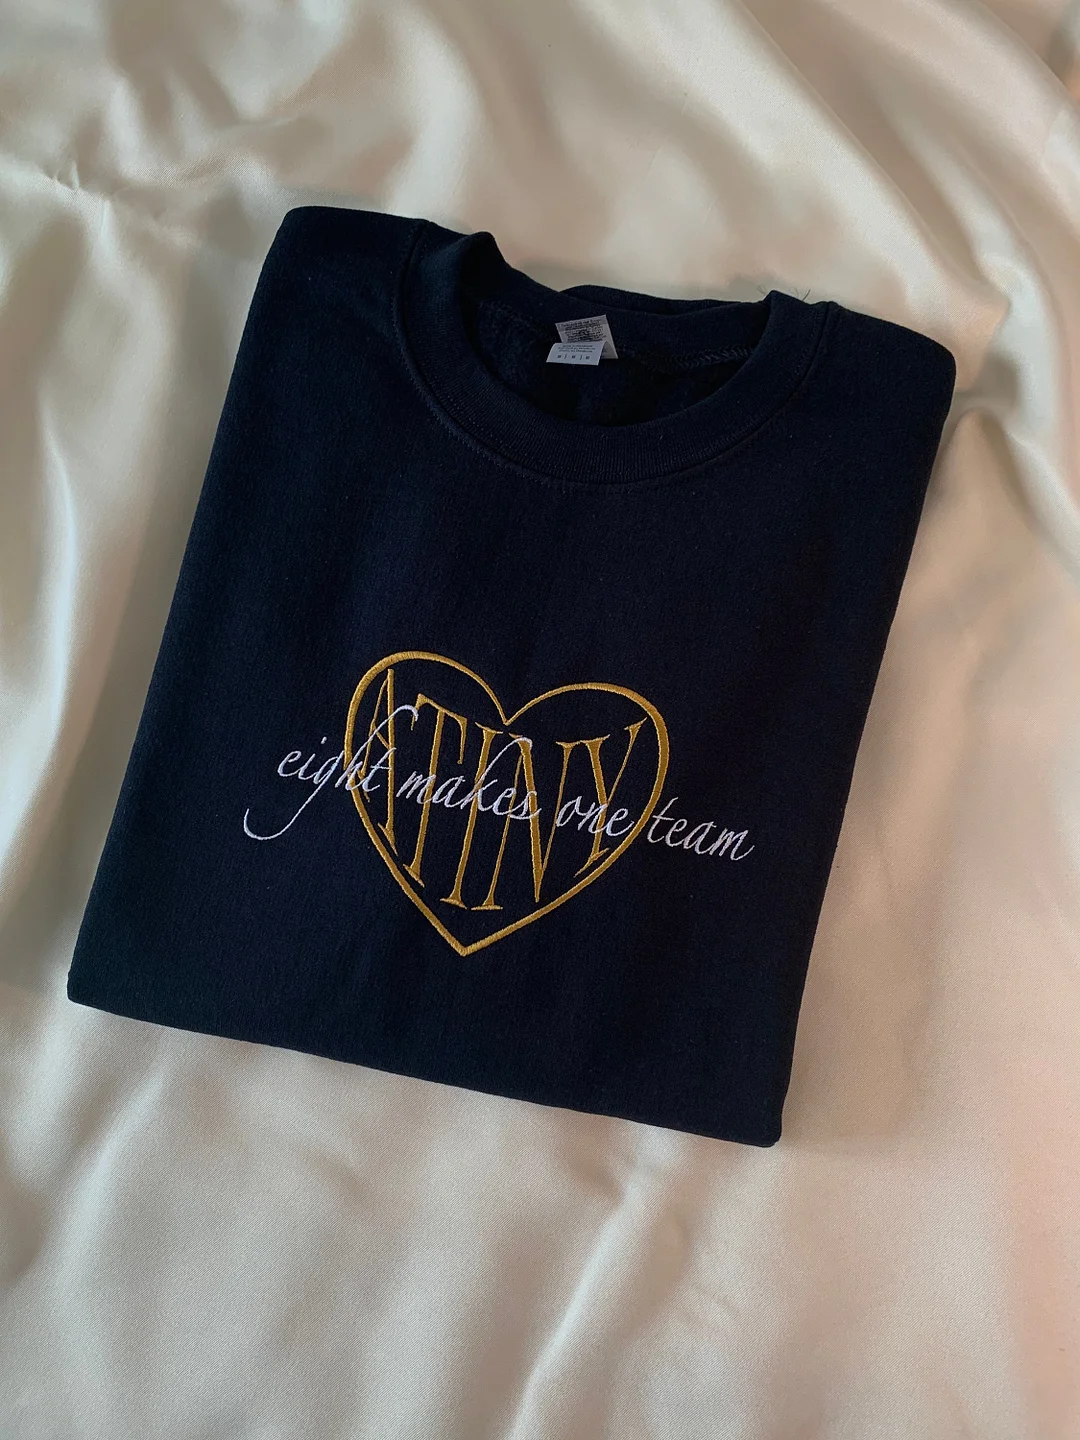 Embroidery Ateez Atiny eight makes one team Sweatshirt Hoodie T-shirt